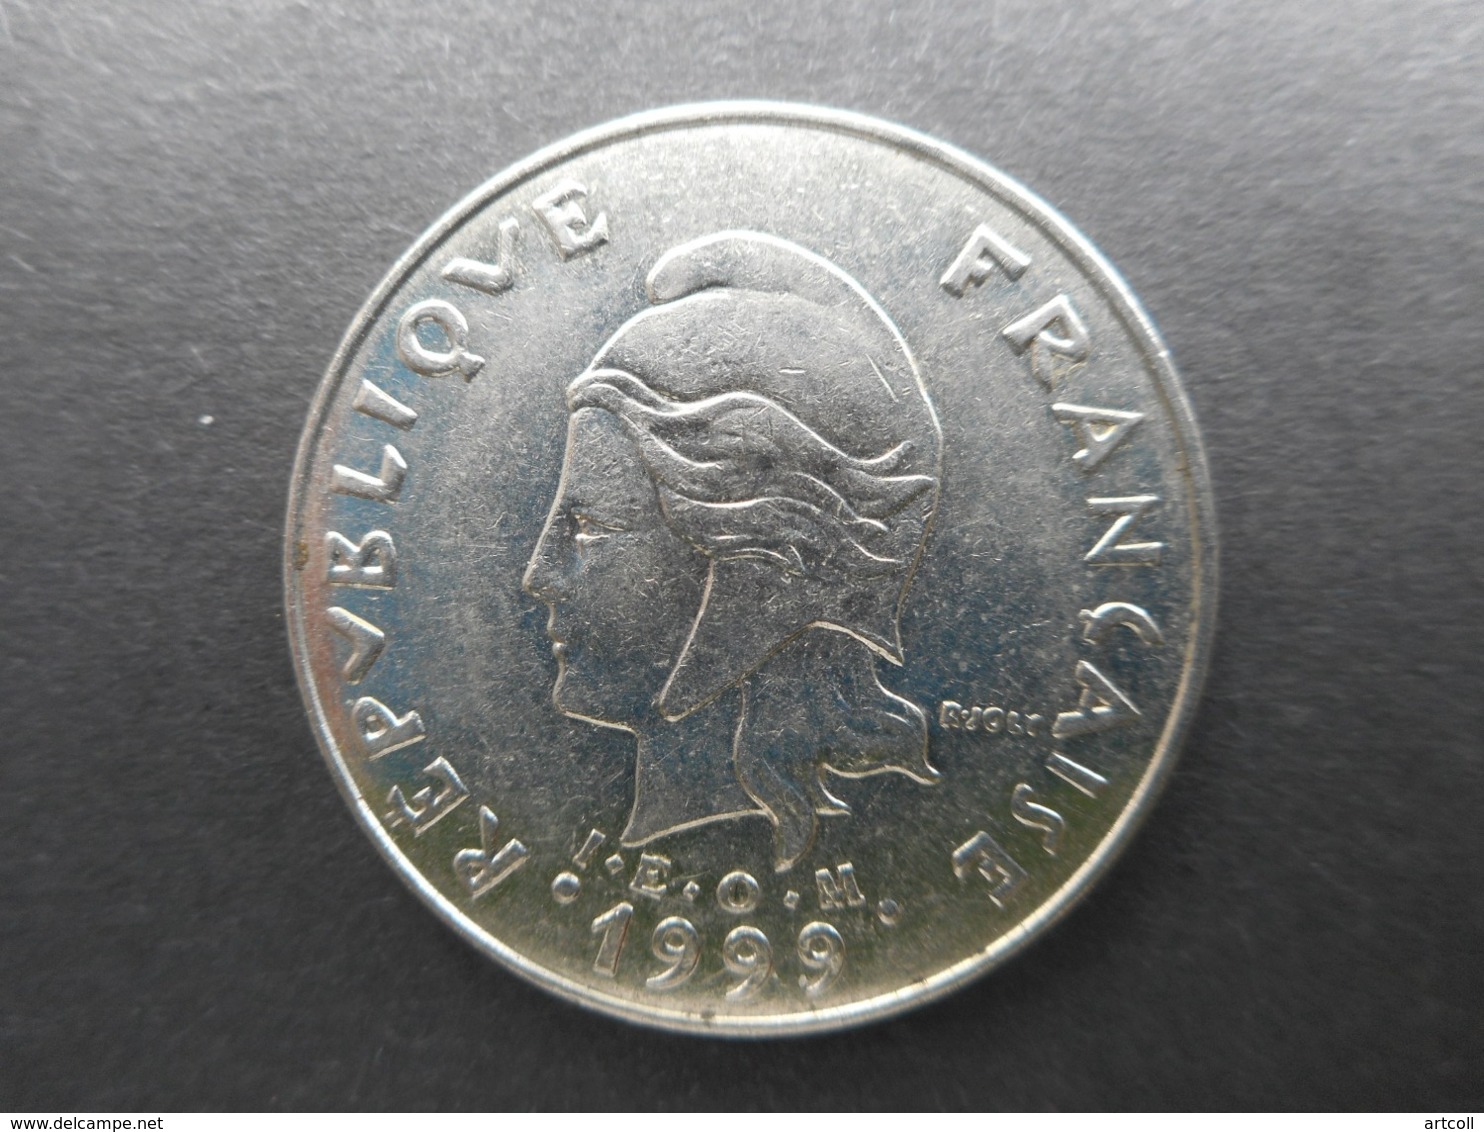 French Polynesia 20 Francs 1999 - Polinesia Francese